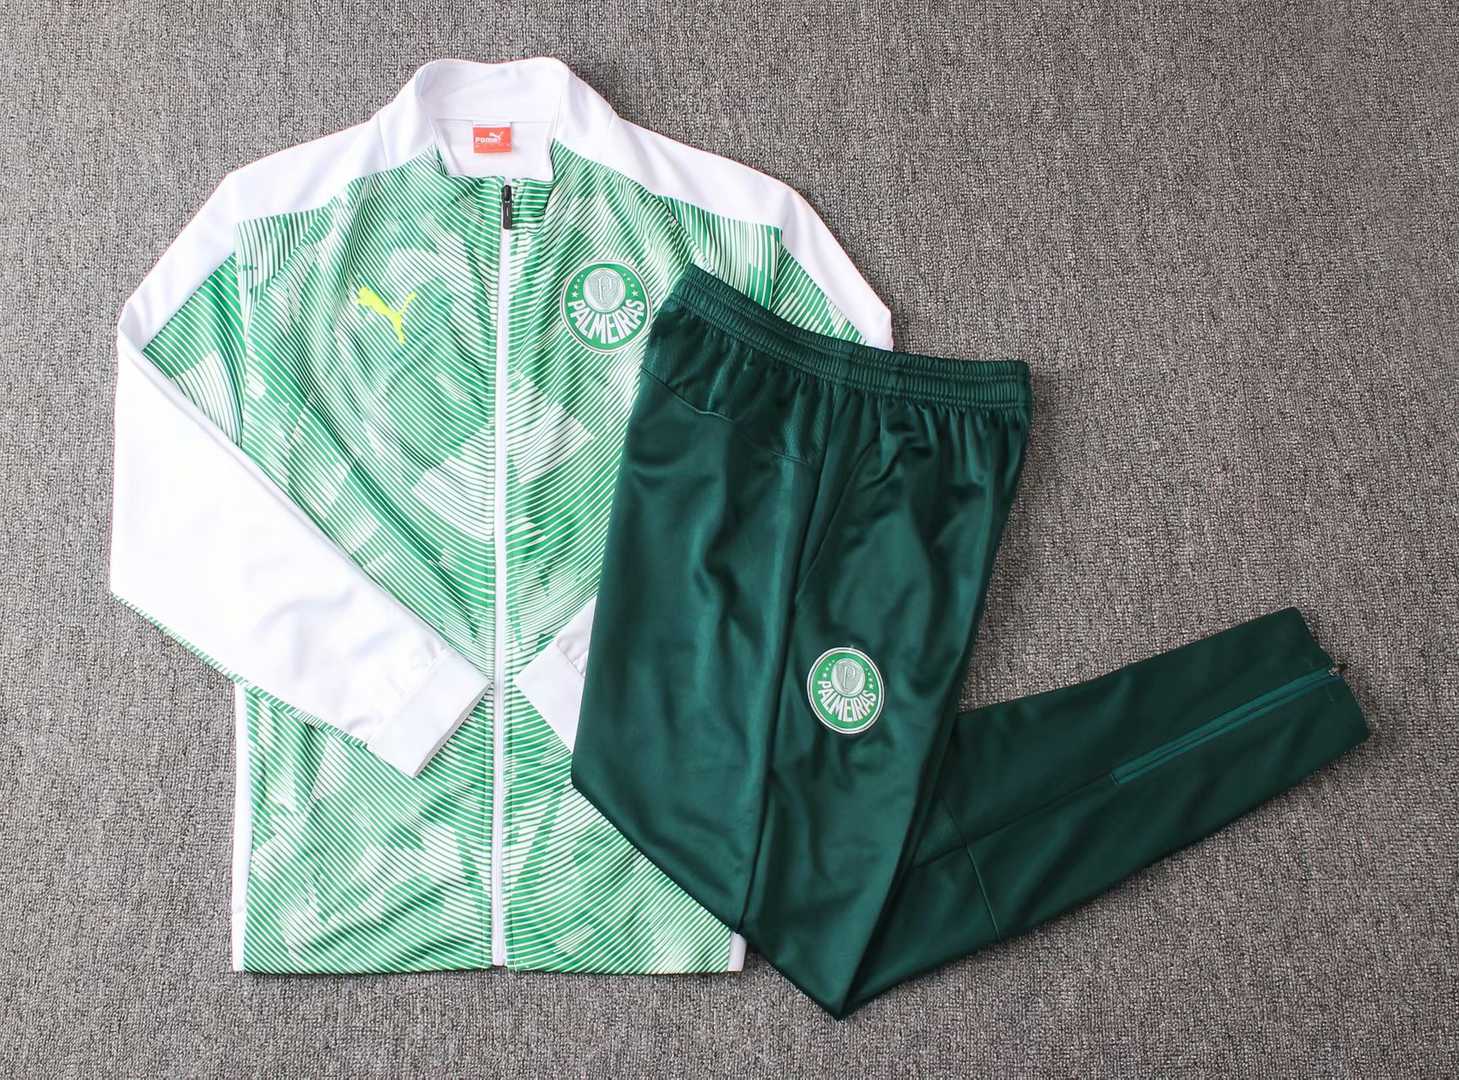 2019/20 Palmeiras Green/White Mens Soccer Training Suit(Jacket + Pants)